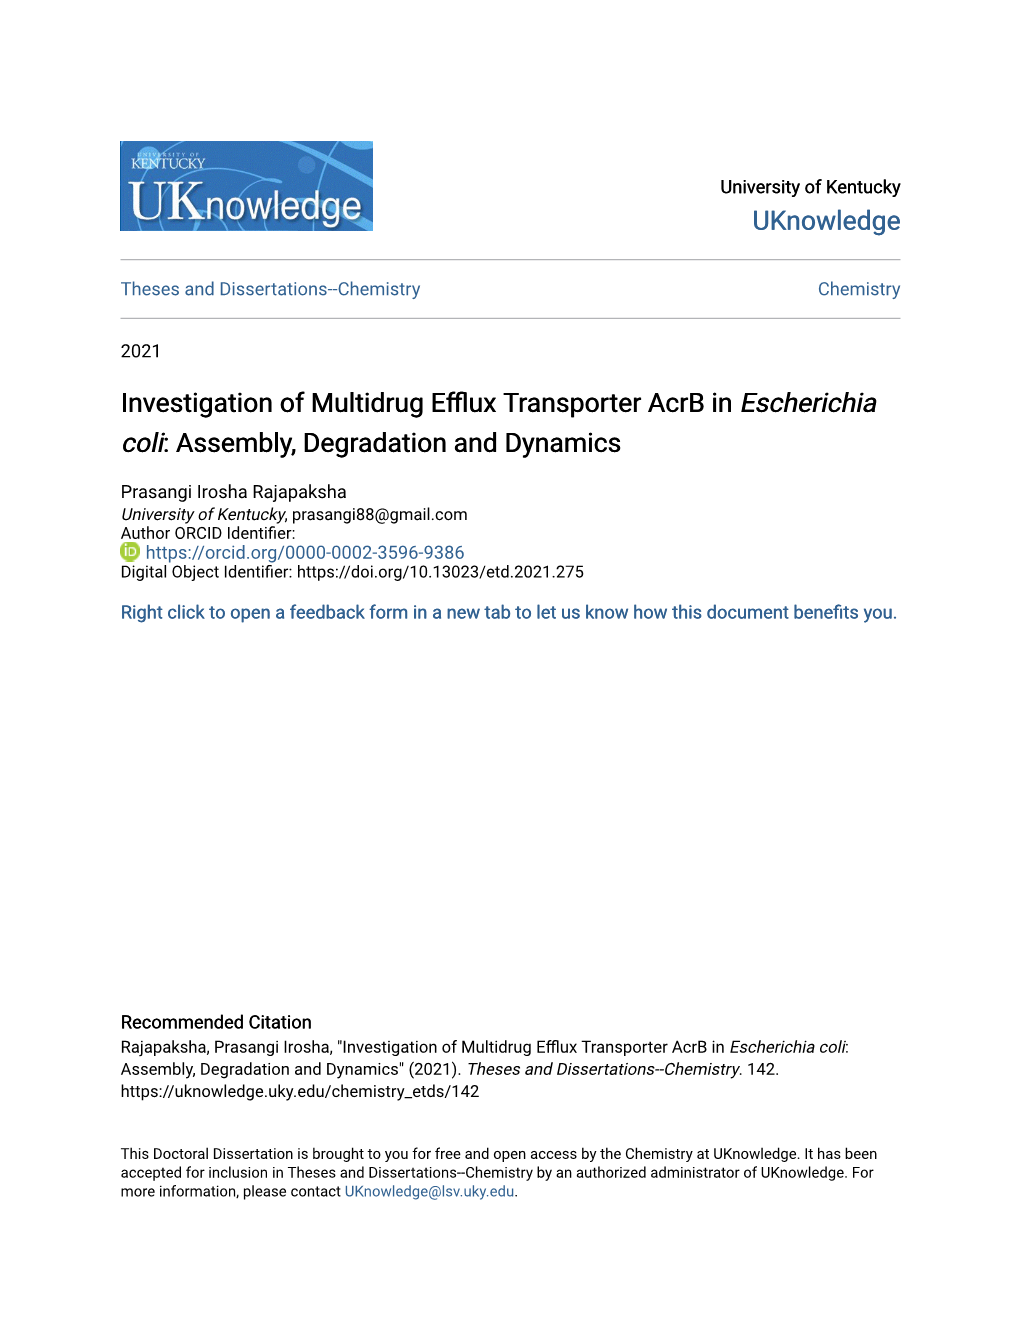 Investigation of Multidrug Efflux Transporter Acrb in Escherichia Coli: Assembly, Degradation and Dynamics